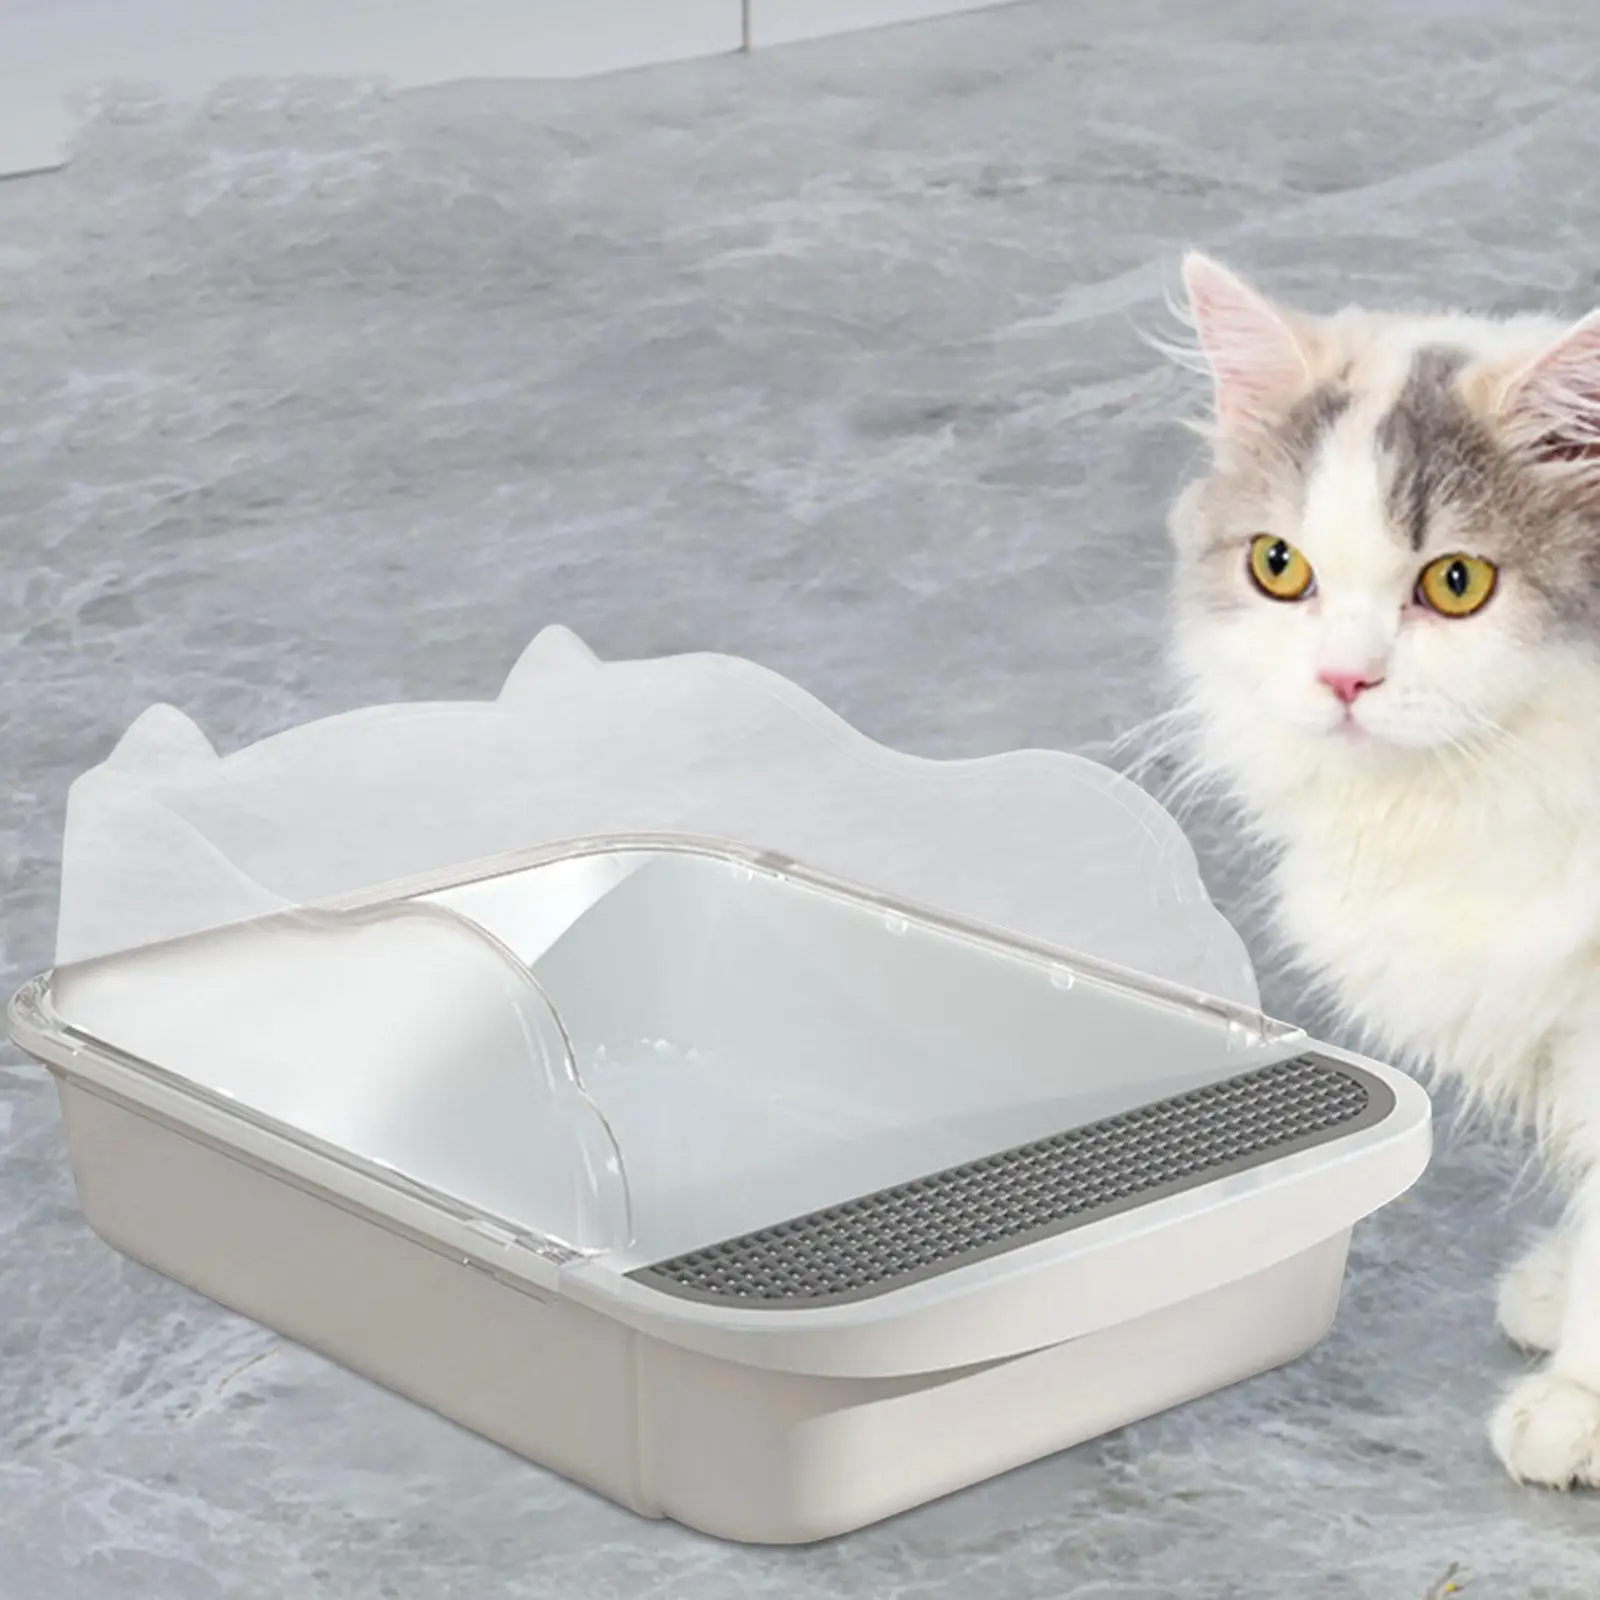 Cat Litter Box Deep Toilet Kitty Litter Pan Bedpan Sifting Litter Box Pet Litter Tray for Single & Multi Cat Homes Dog Rabbits